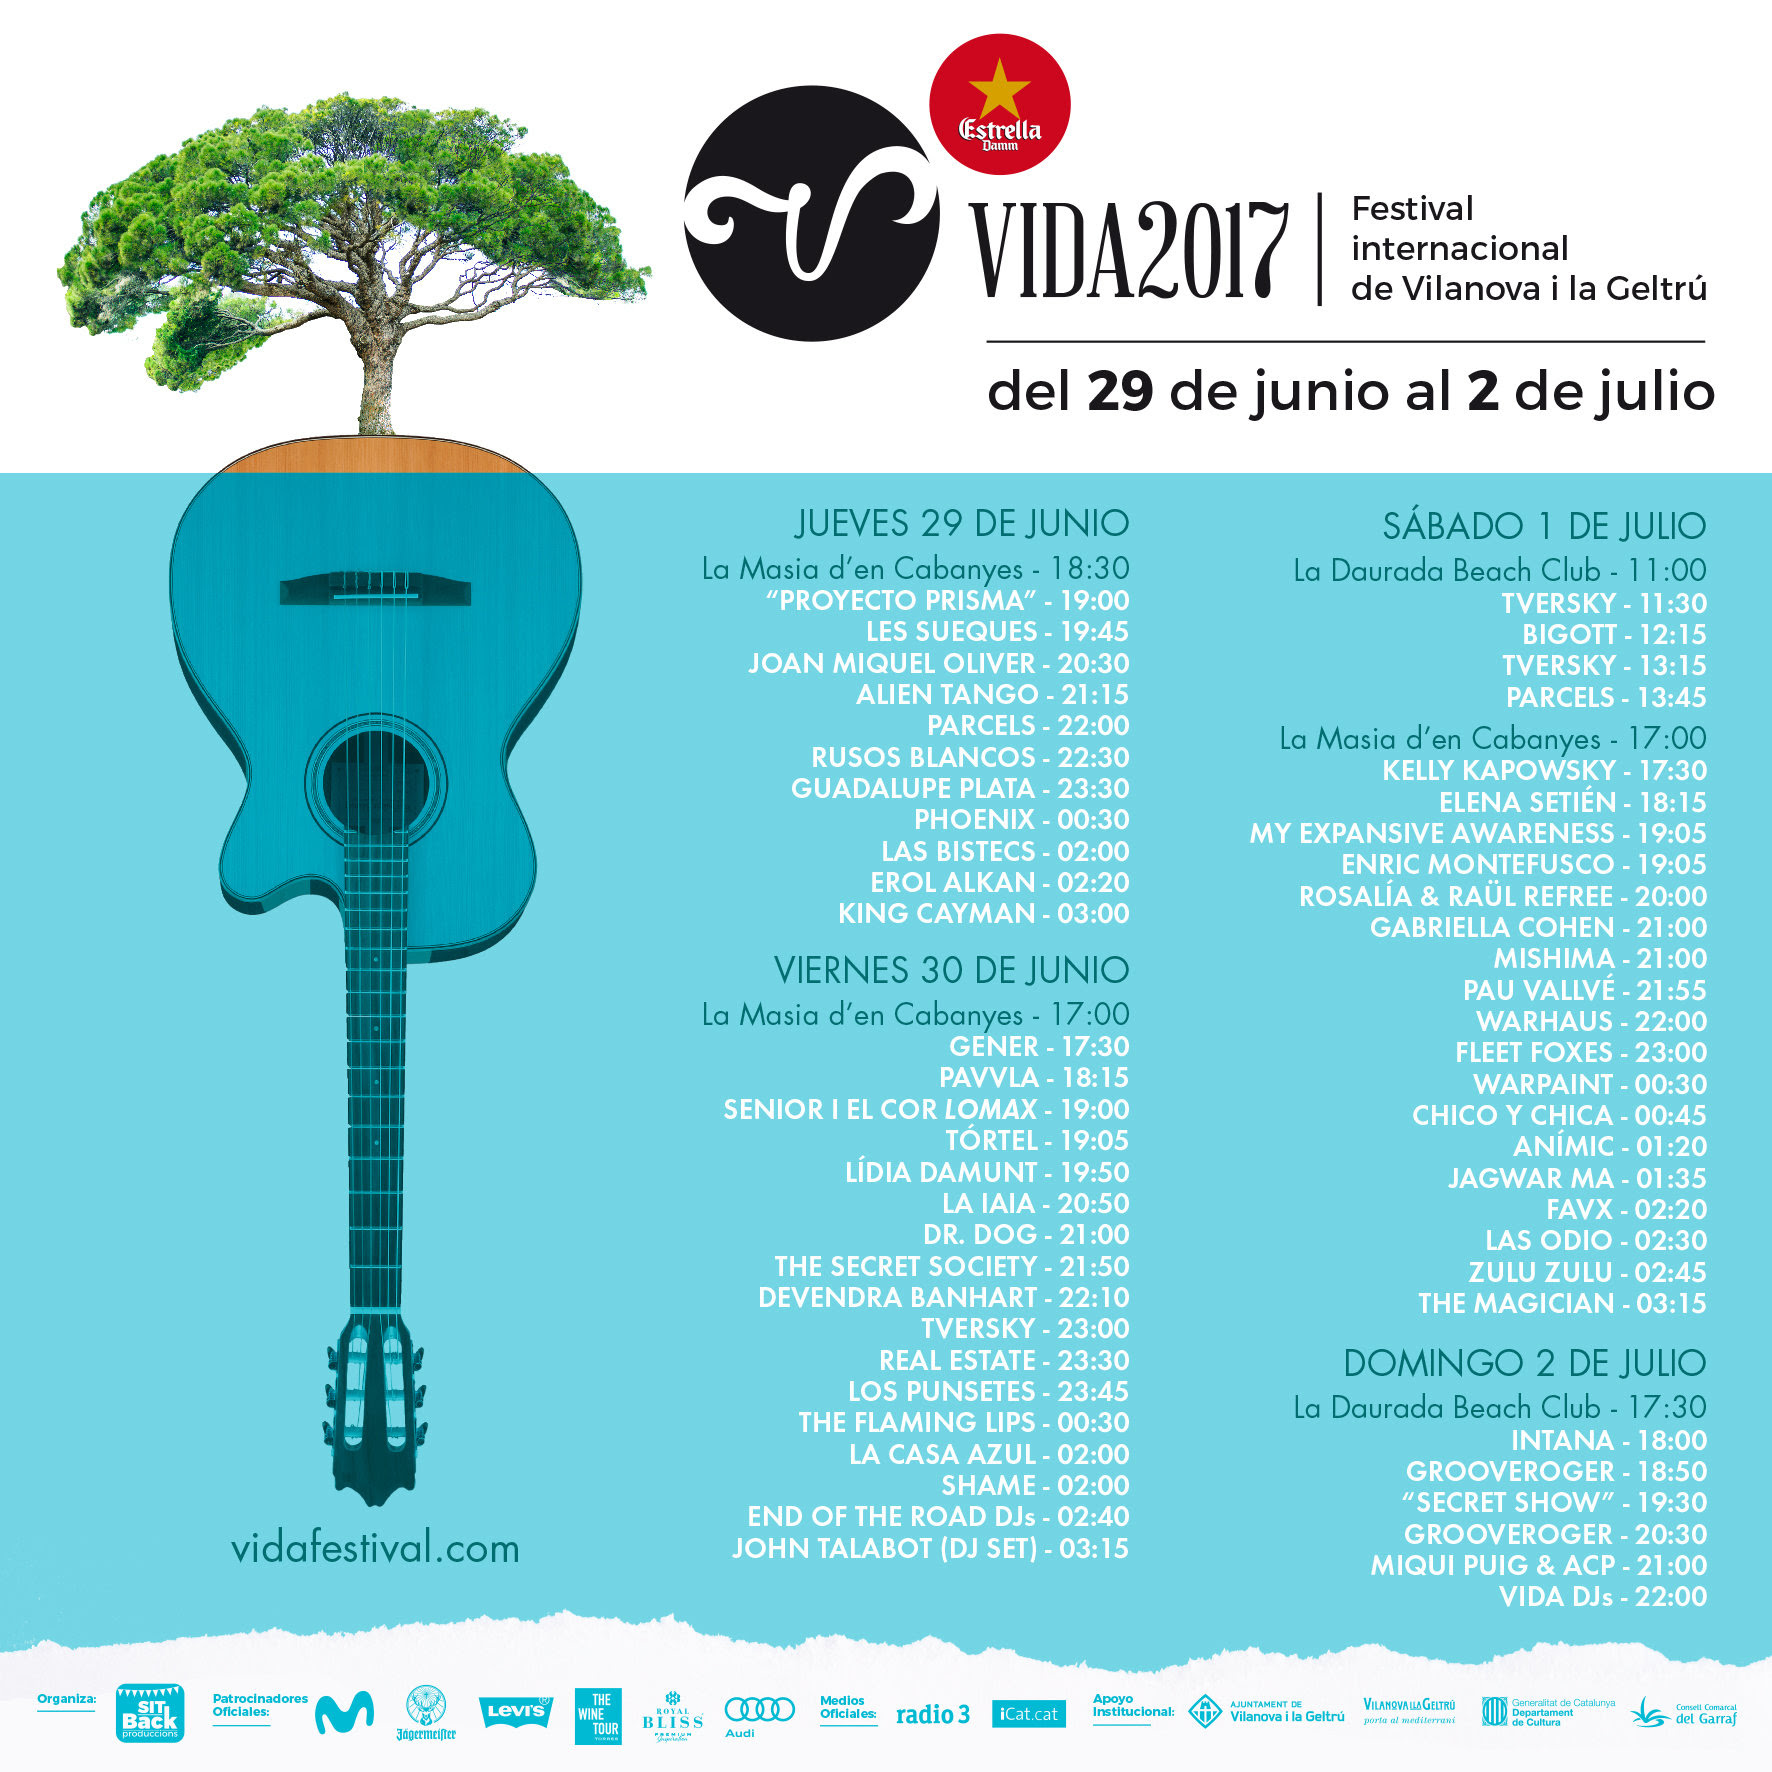 Horarios Vida Festiavl 2017 . Festival internacional de Vilanova i la Geltrù